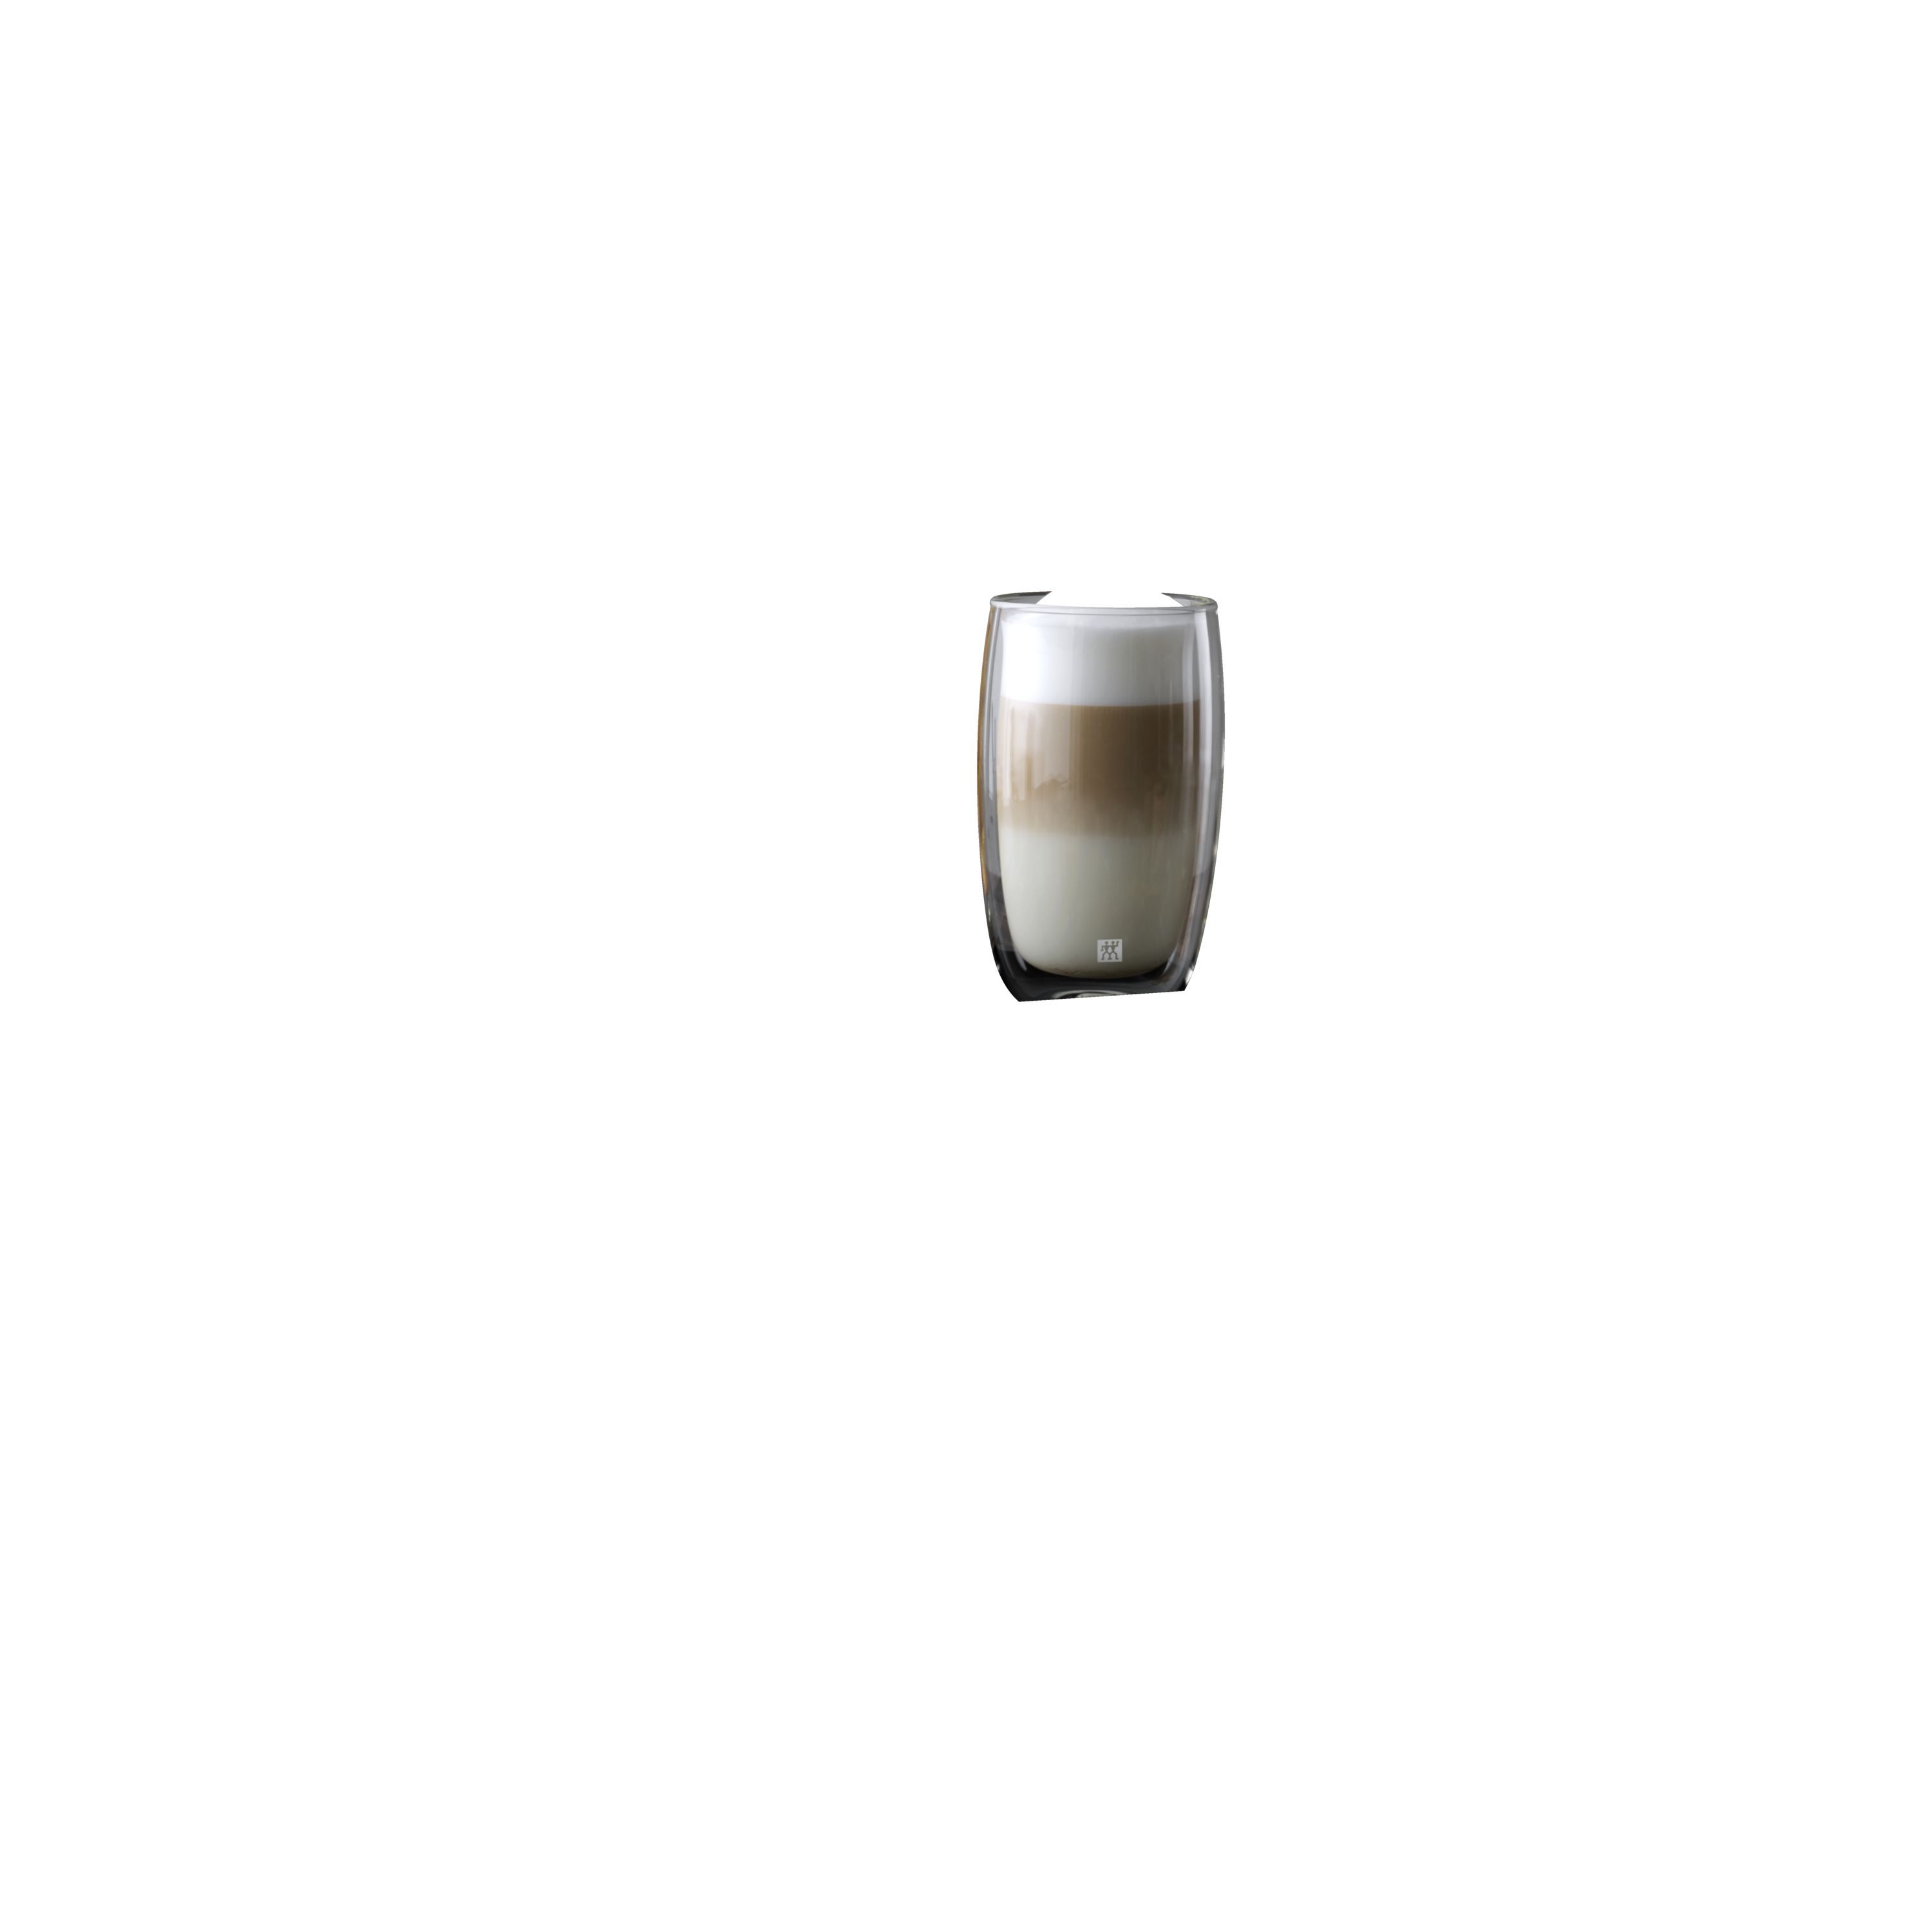 Zwilling Sorrento Plus Double Wall Glassware 2-pc Espresso Glass Mug Set, Wall